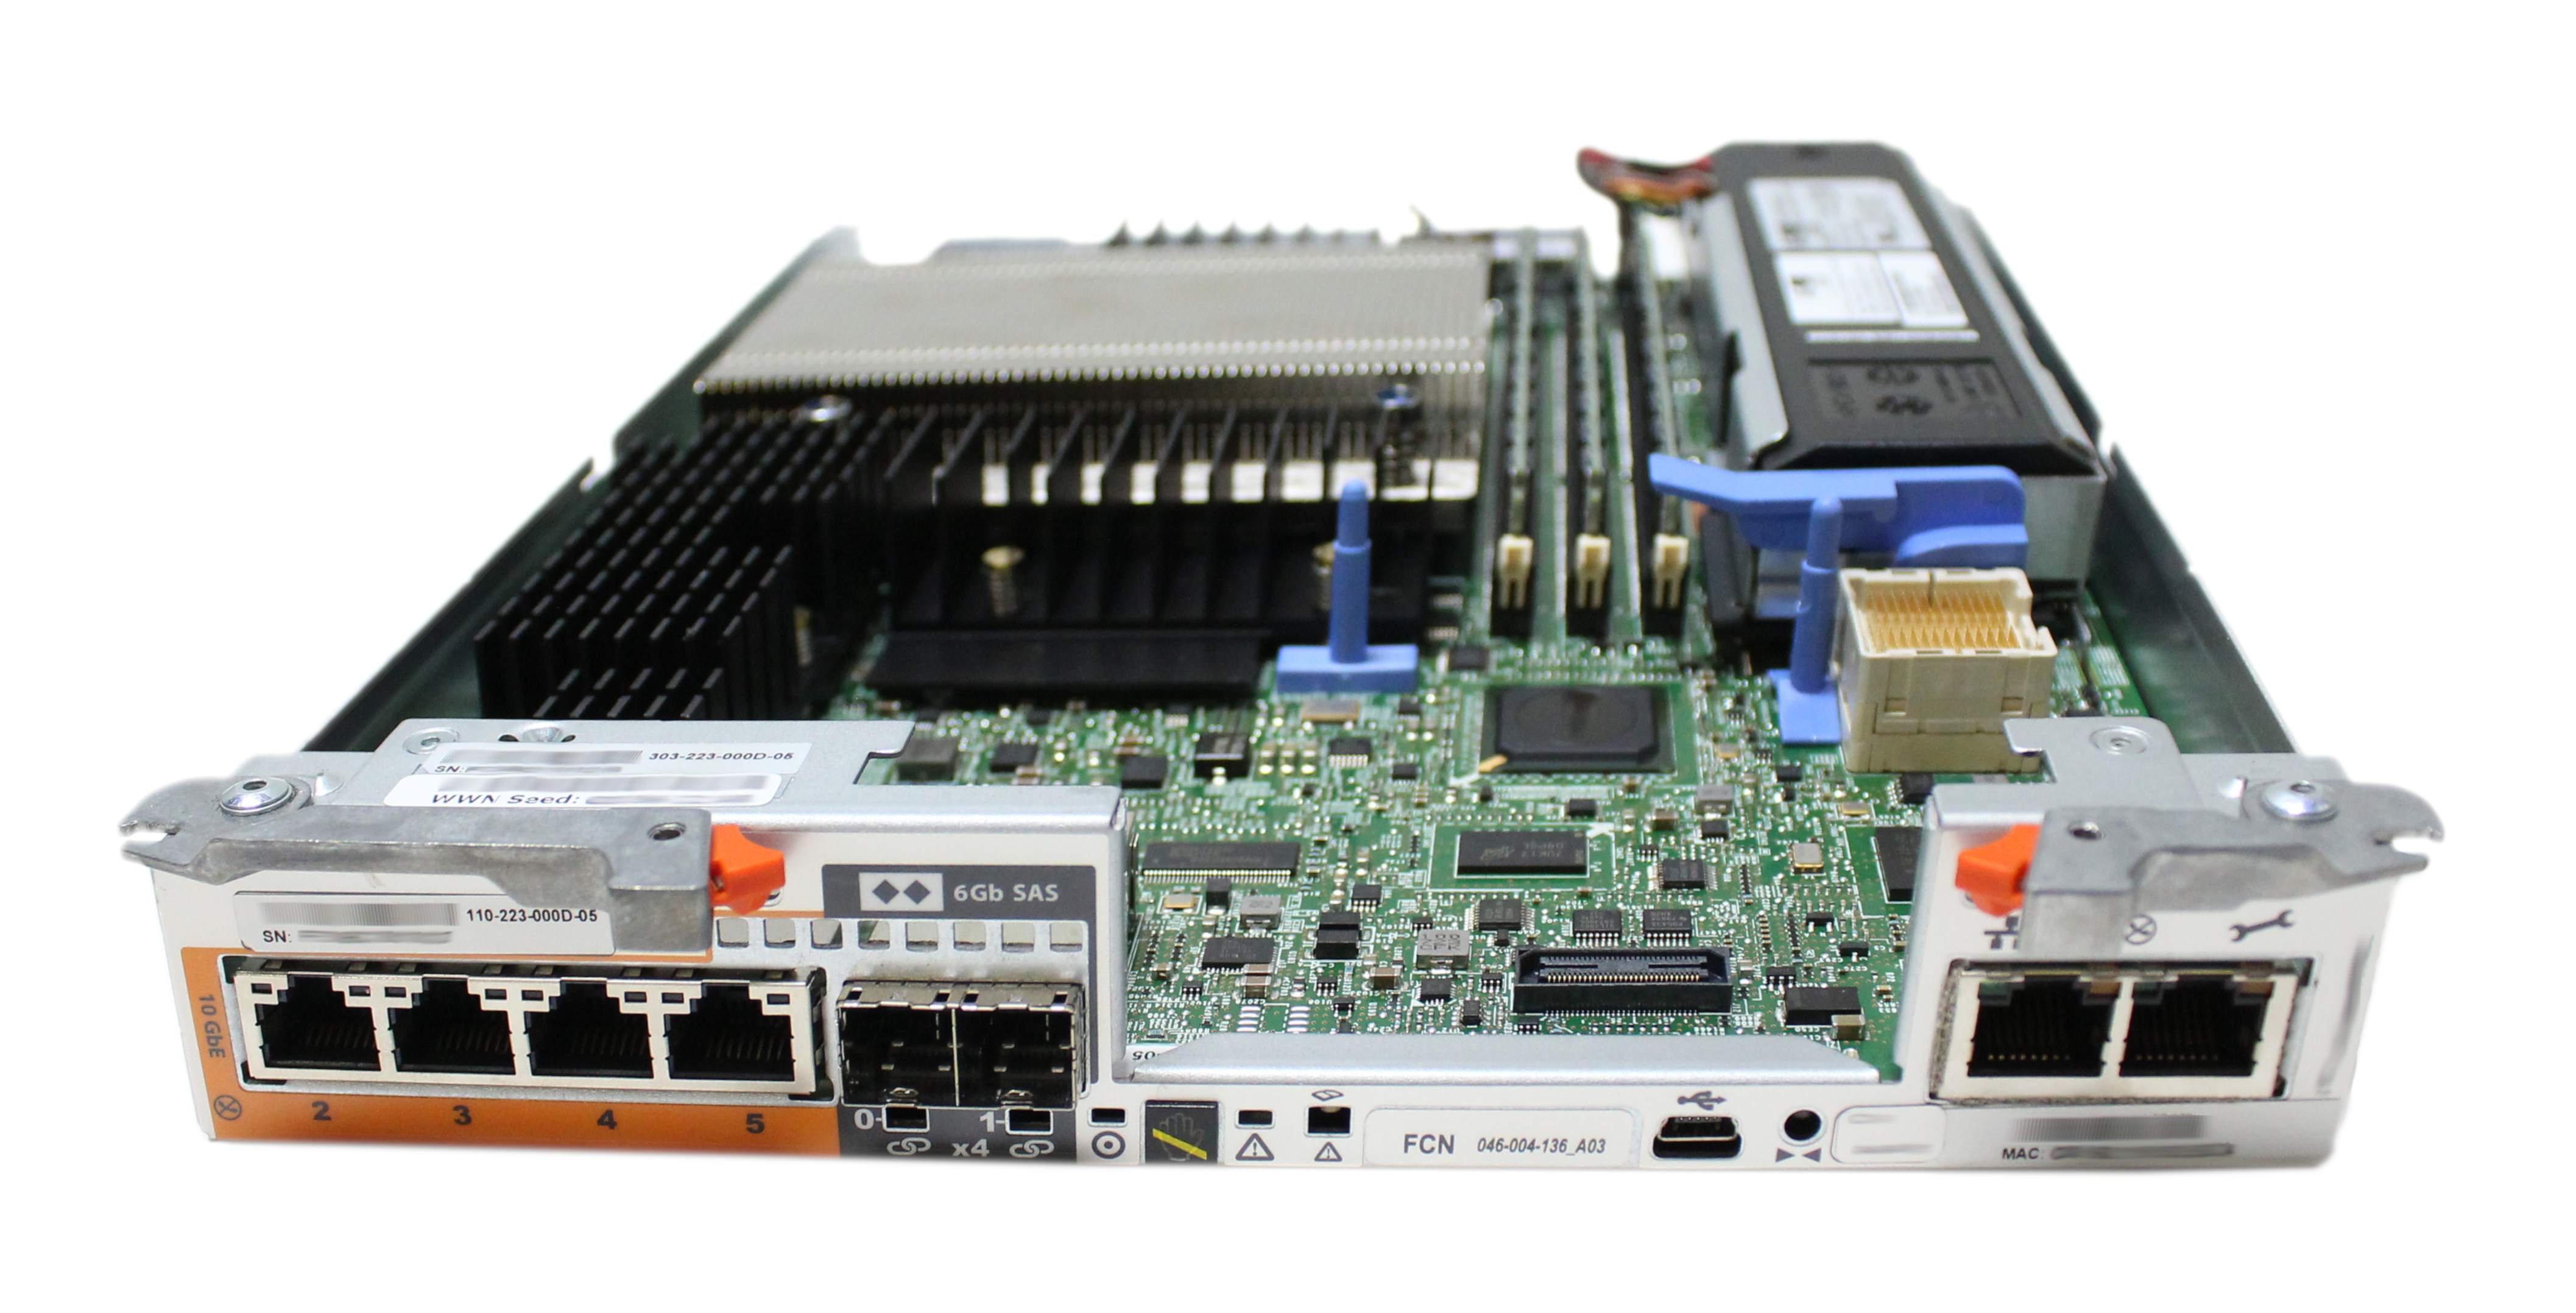 EMC Storage Module Controller Processor FCN 046-004-136_A03 110-223-000D-05 303-223-000D-05